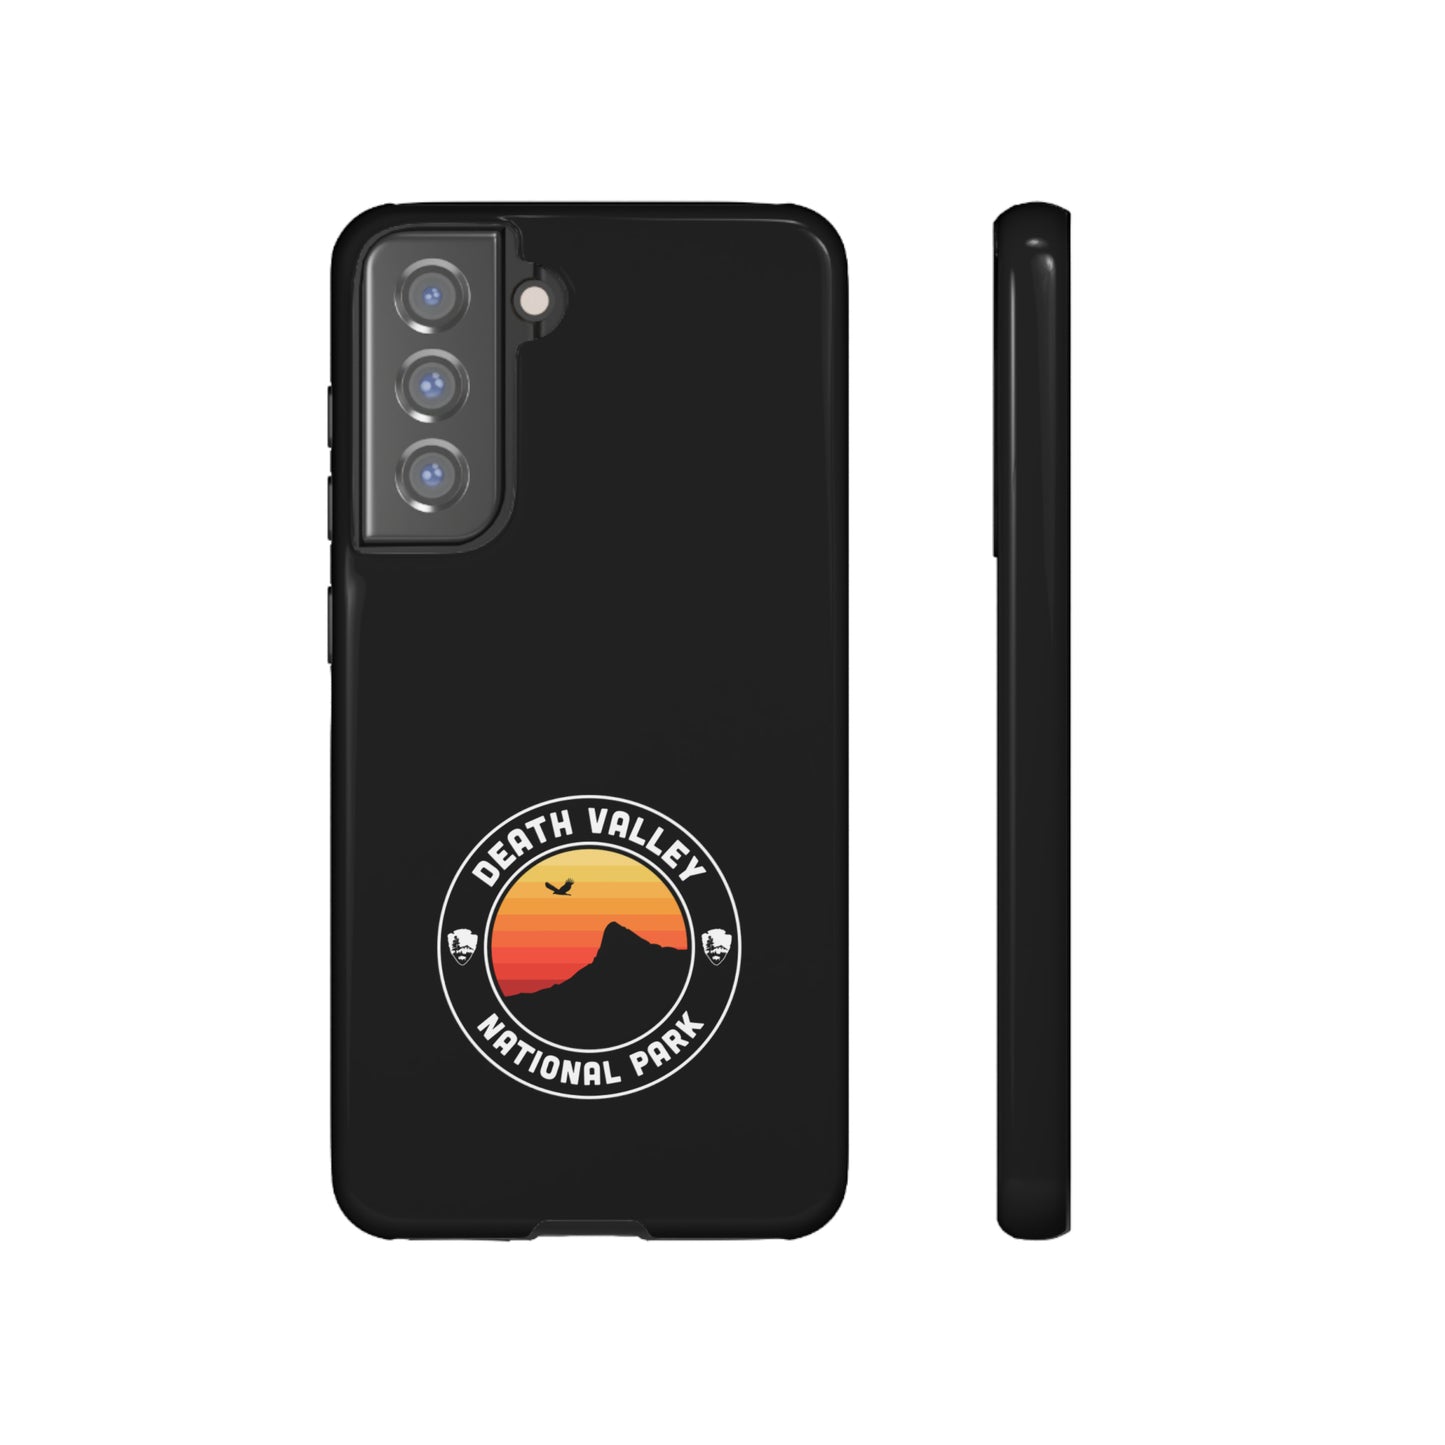 Death Valley National Park Phone Case - Round Emblem Design